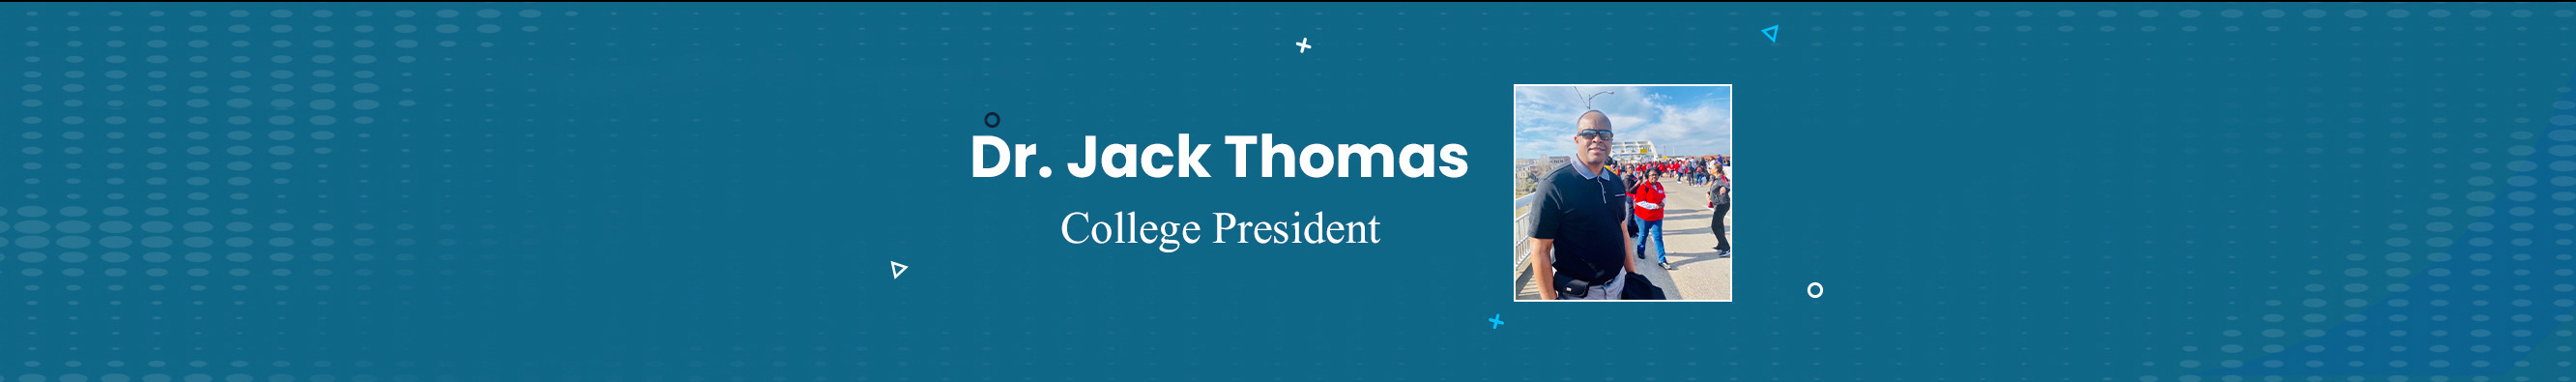 Dr. Jack Thomas's profile banner